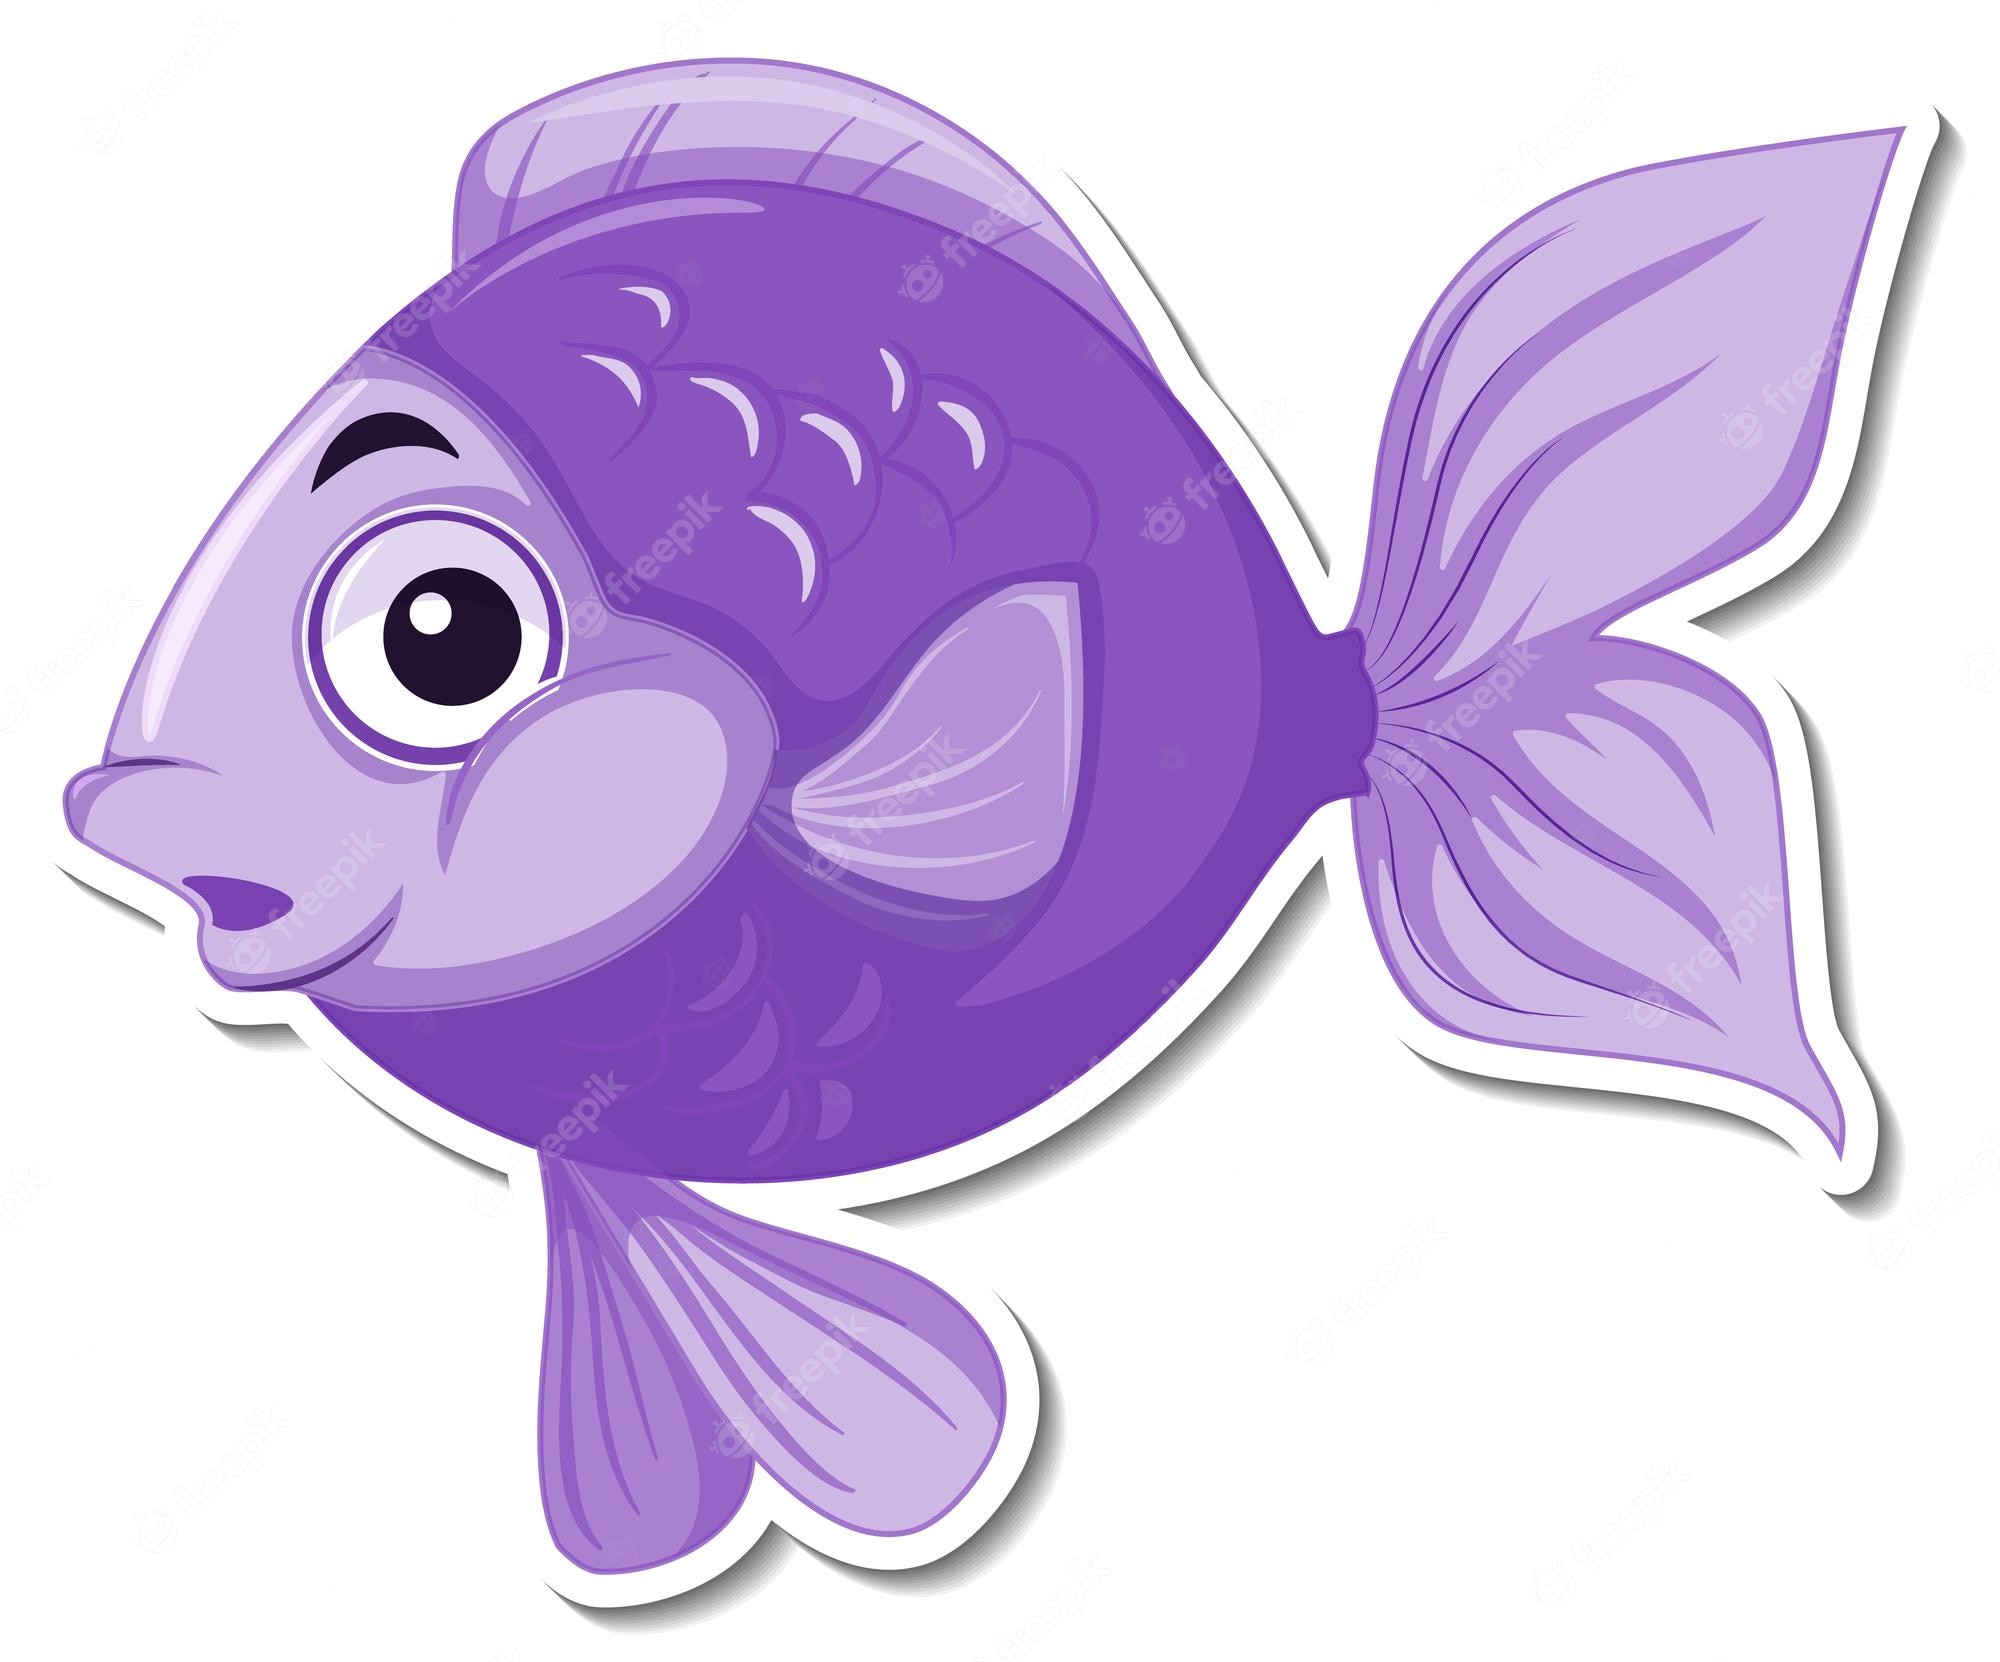 Cute fish cartoon. fish clipart vector illustration | Download on ...